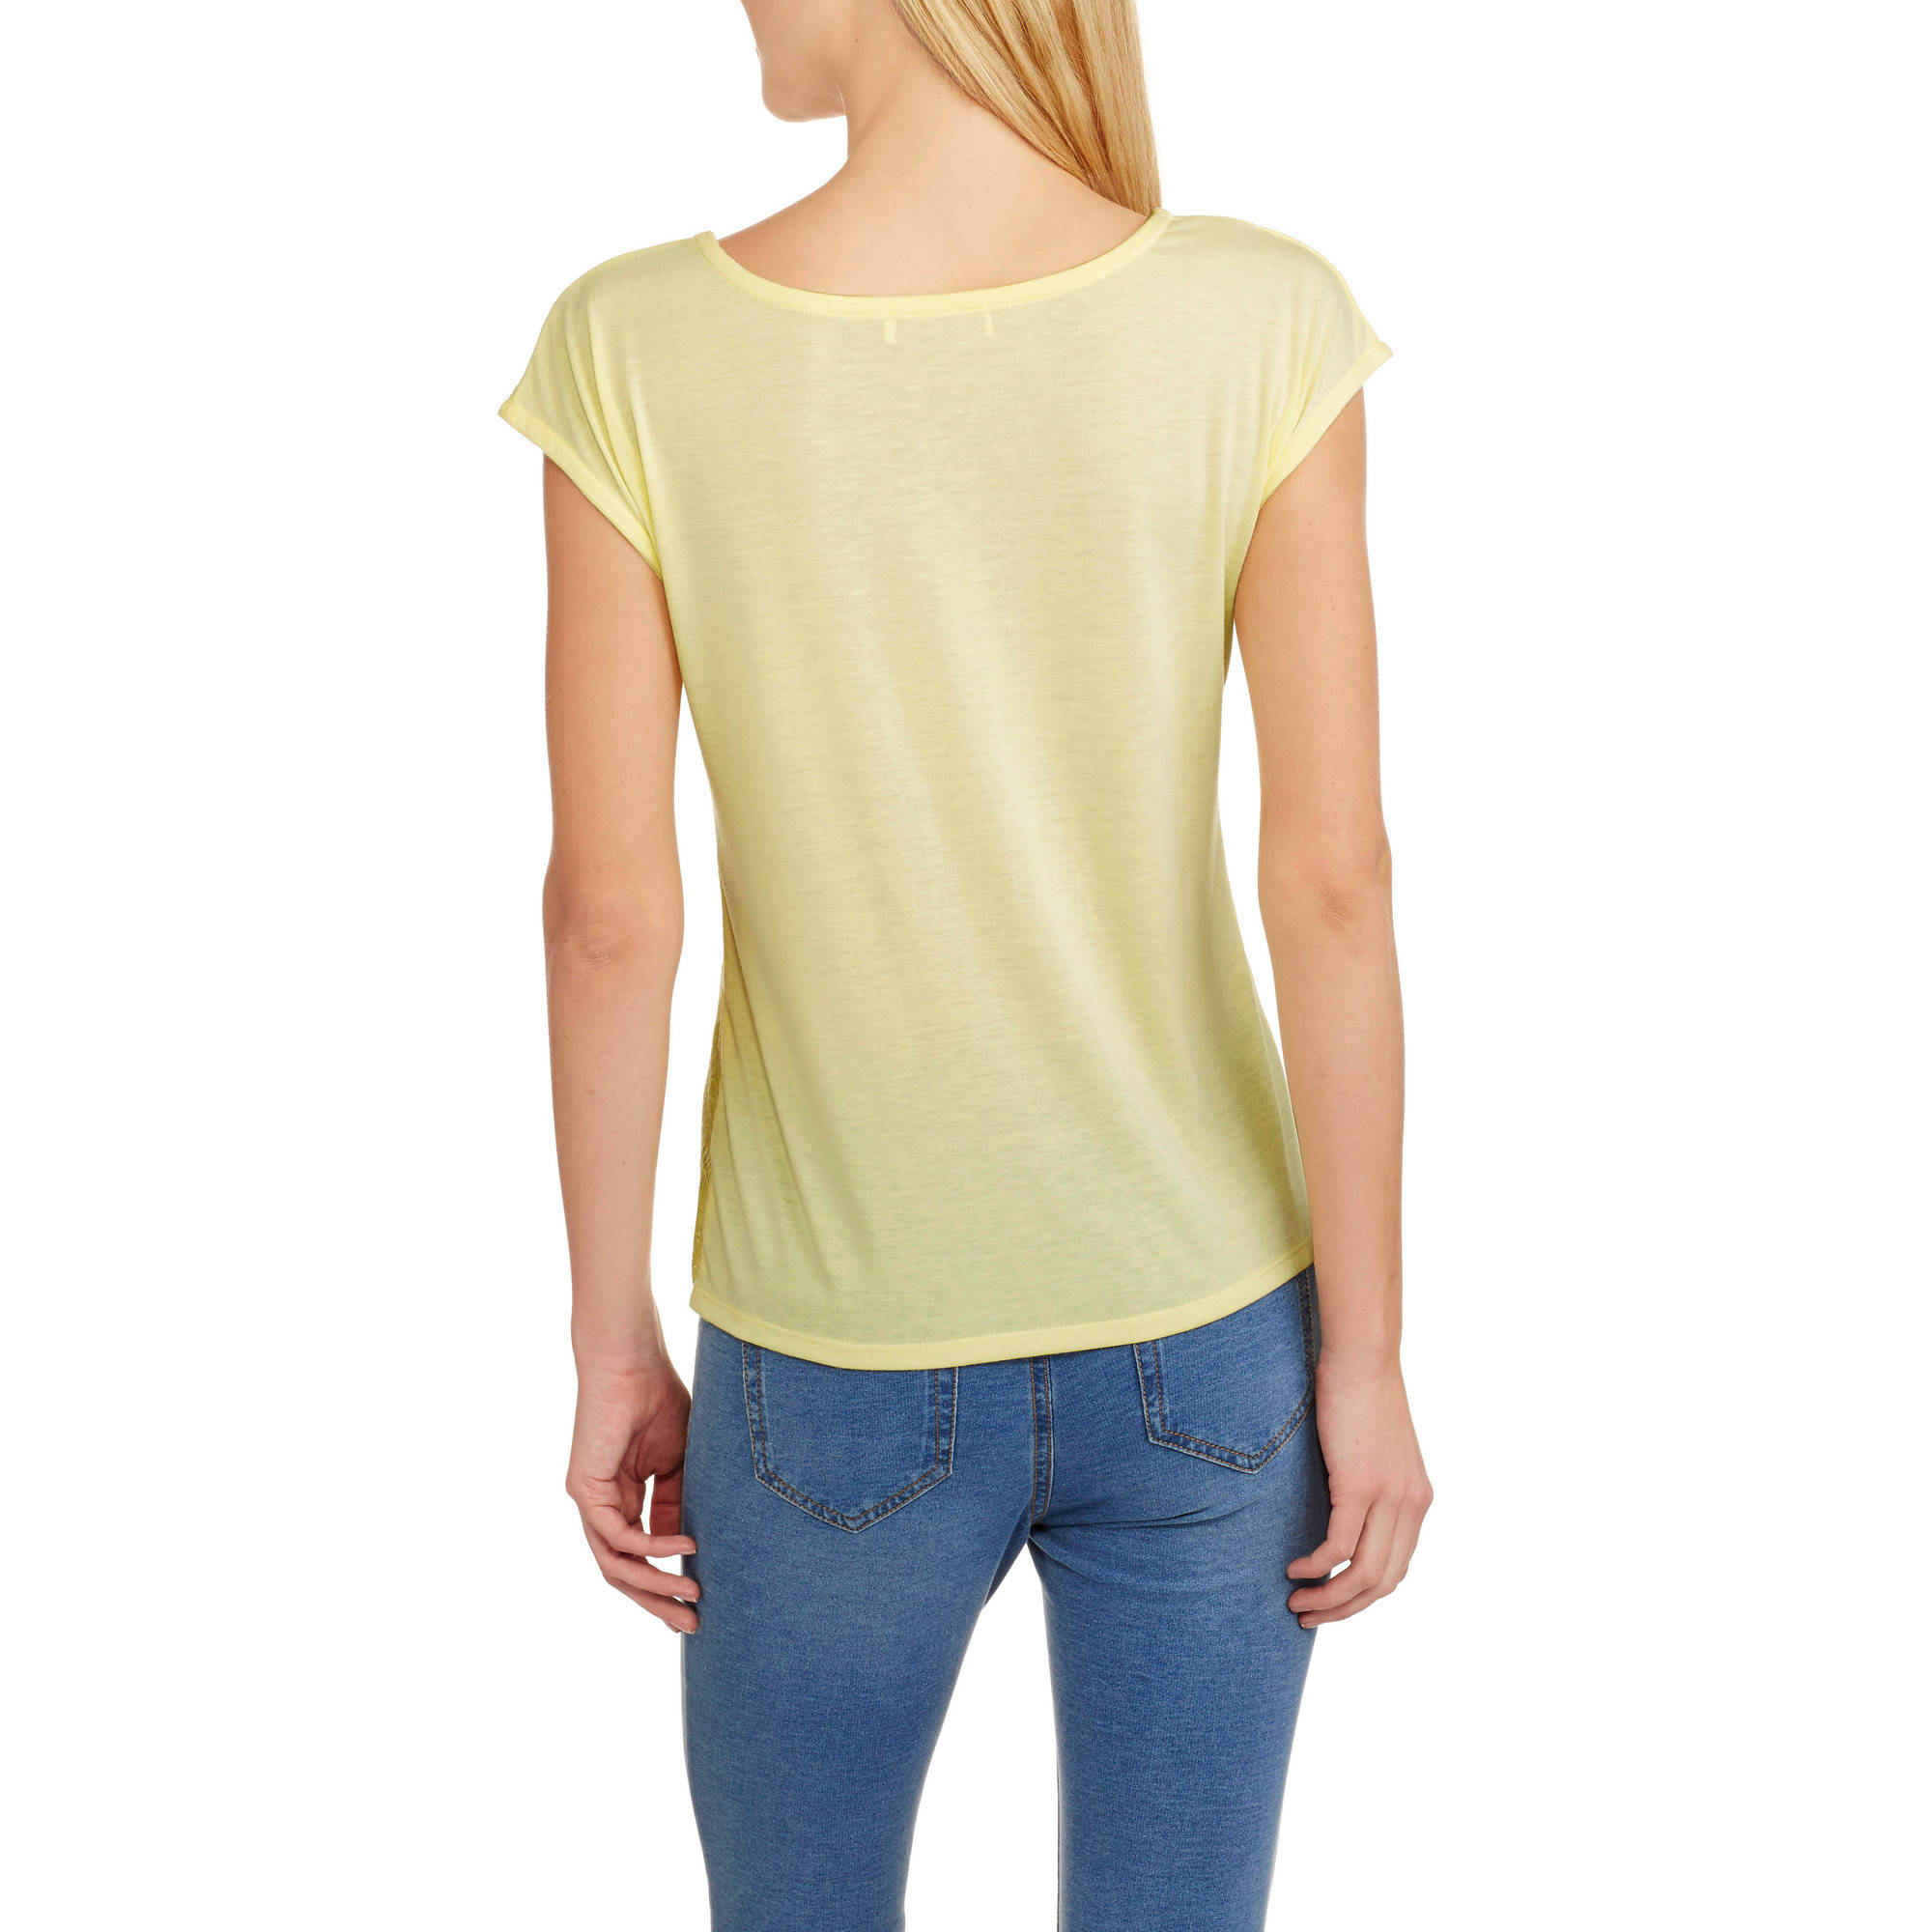 Women's Lace T-Shirt - image 2 of 2